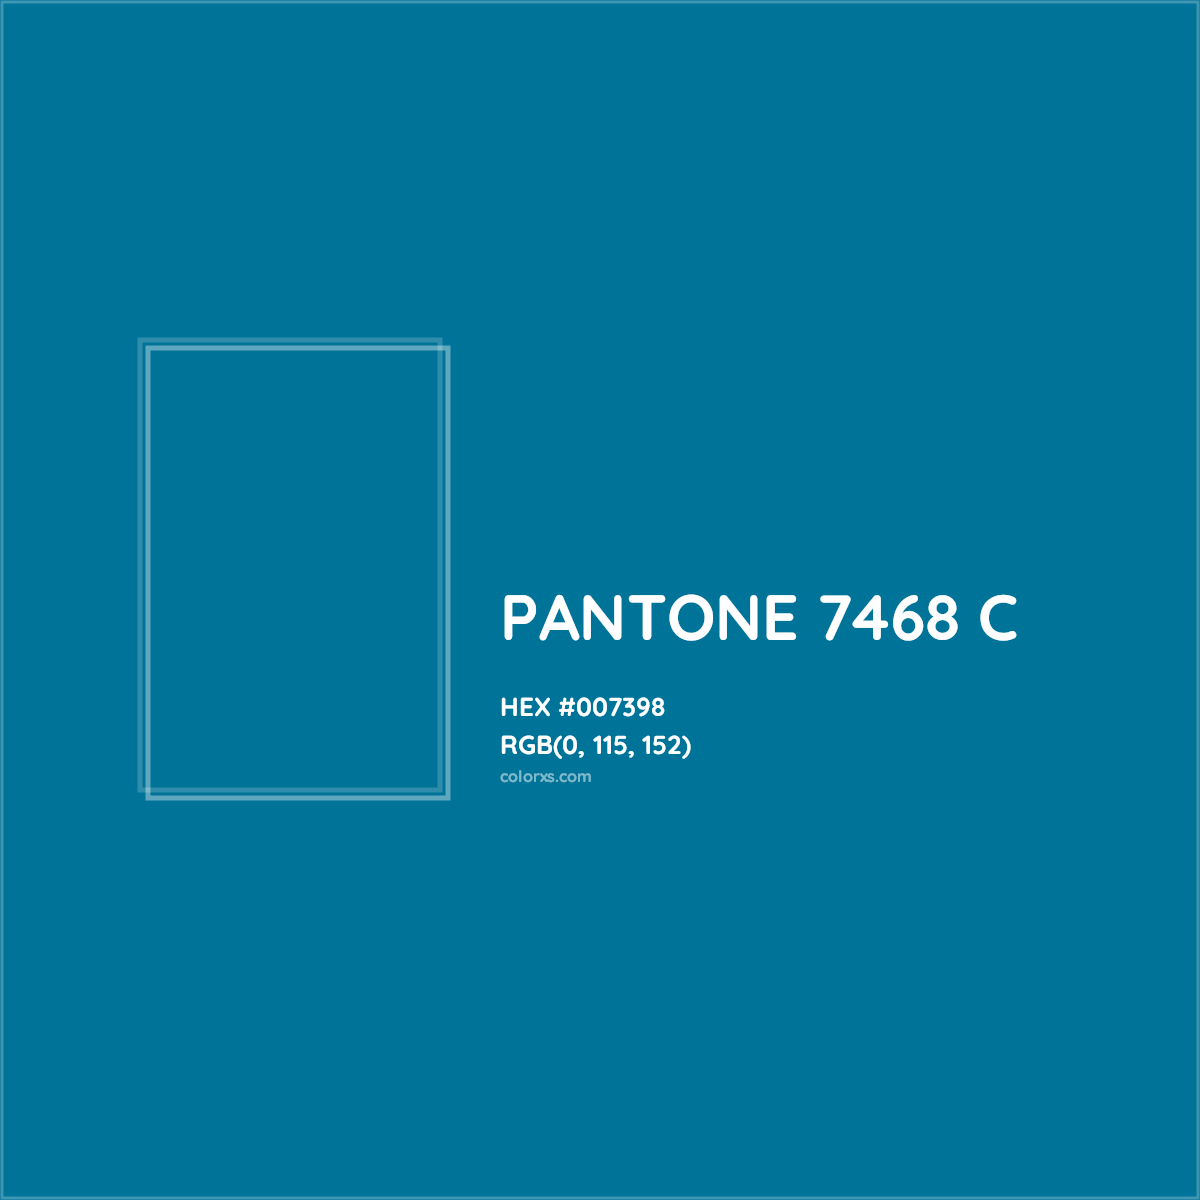 HEX #007398 PANTONE 7468 C CMS Pantone PMS - Color Code